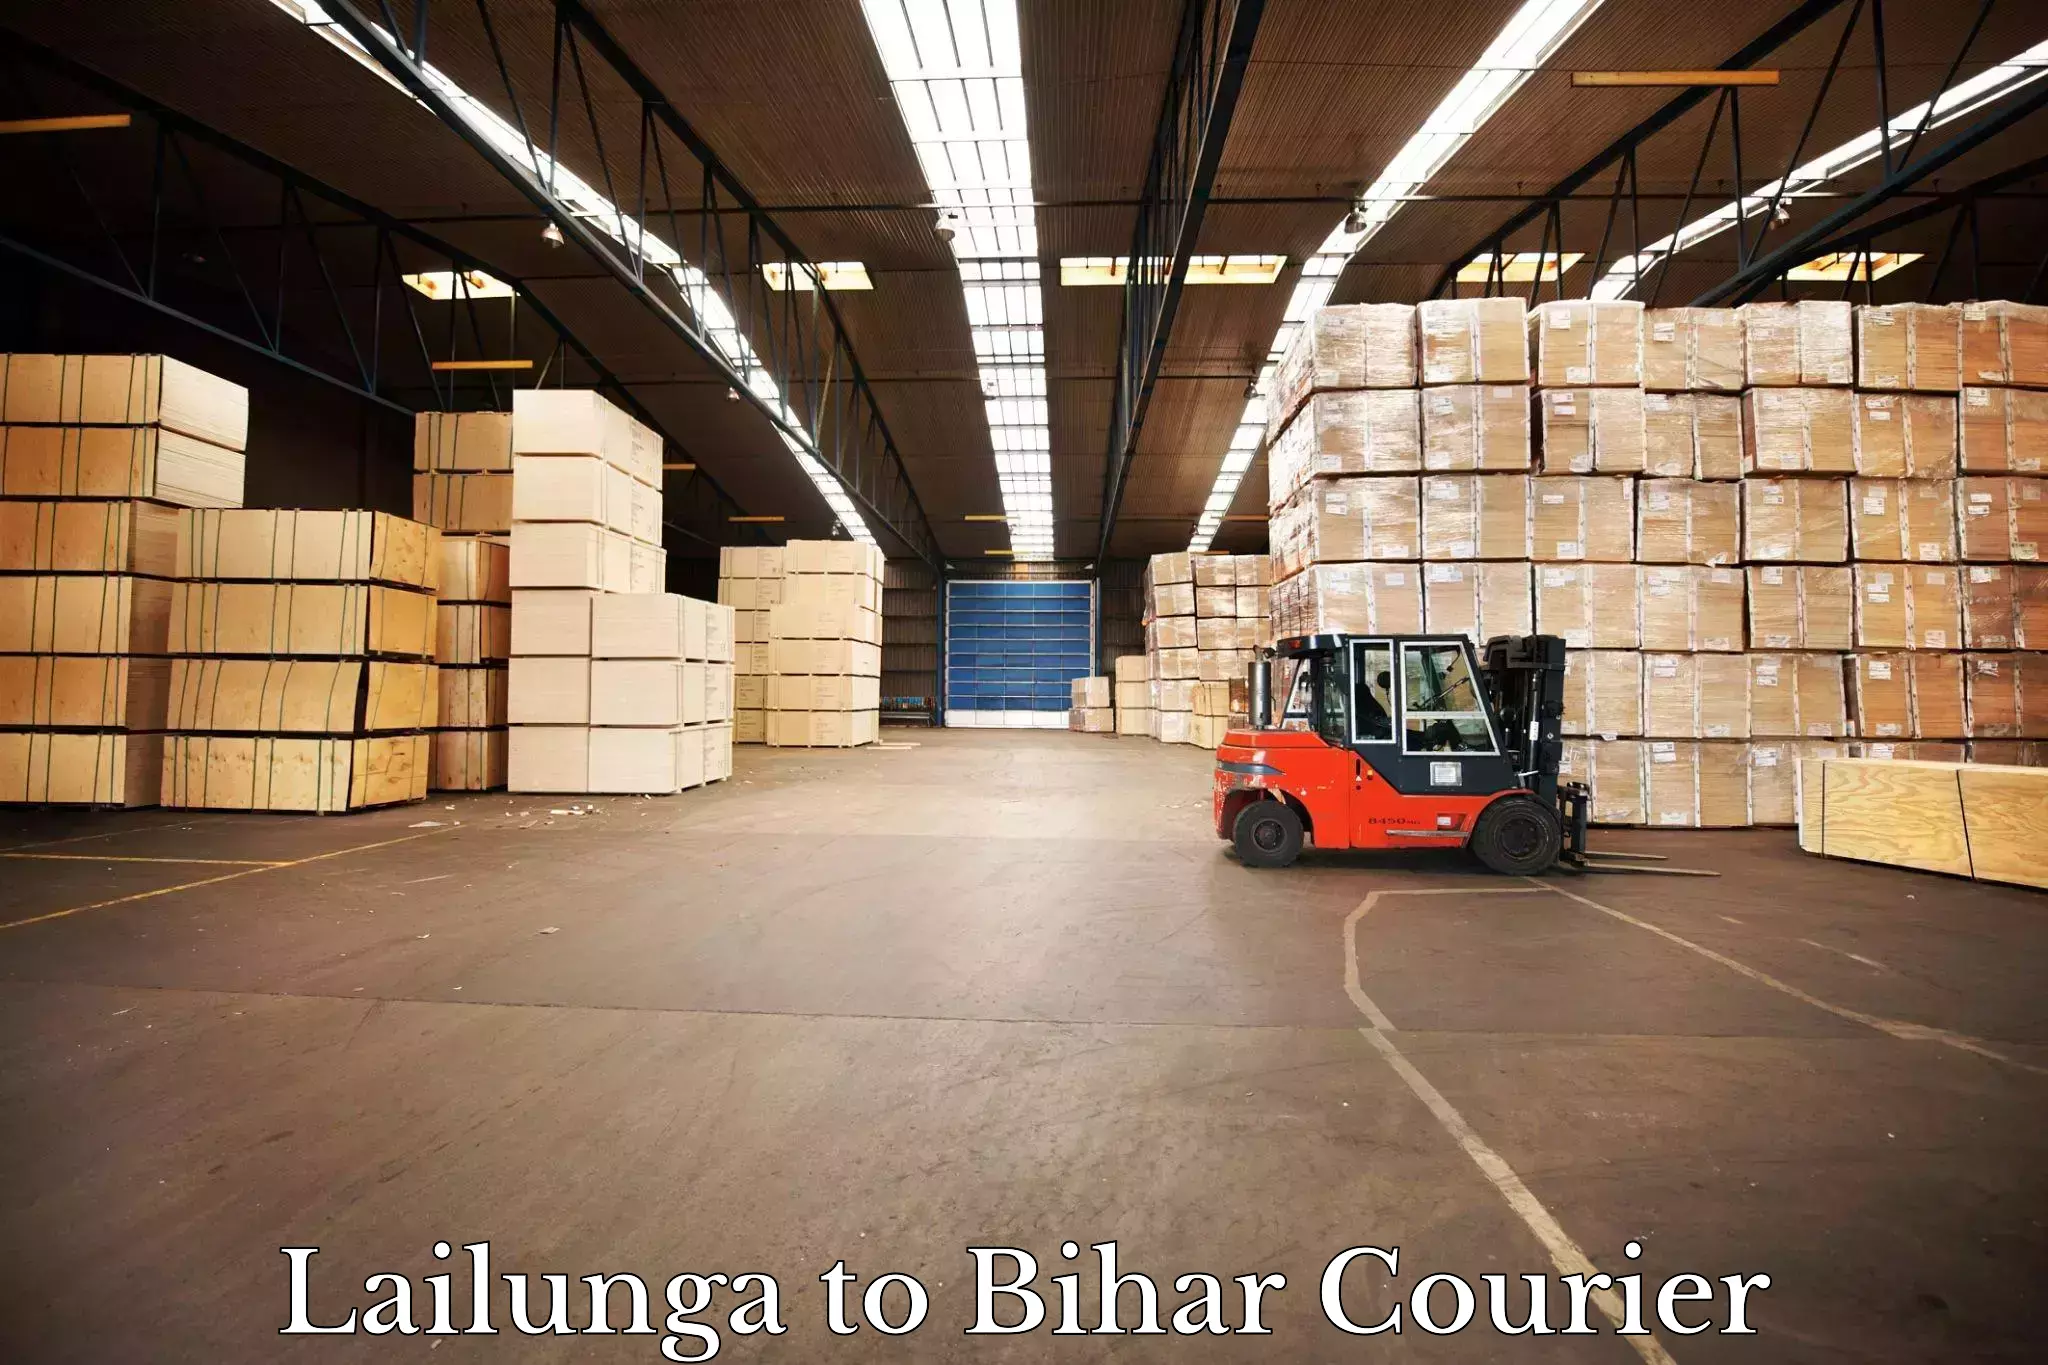 Courier service comparison Lailunga to Bihar